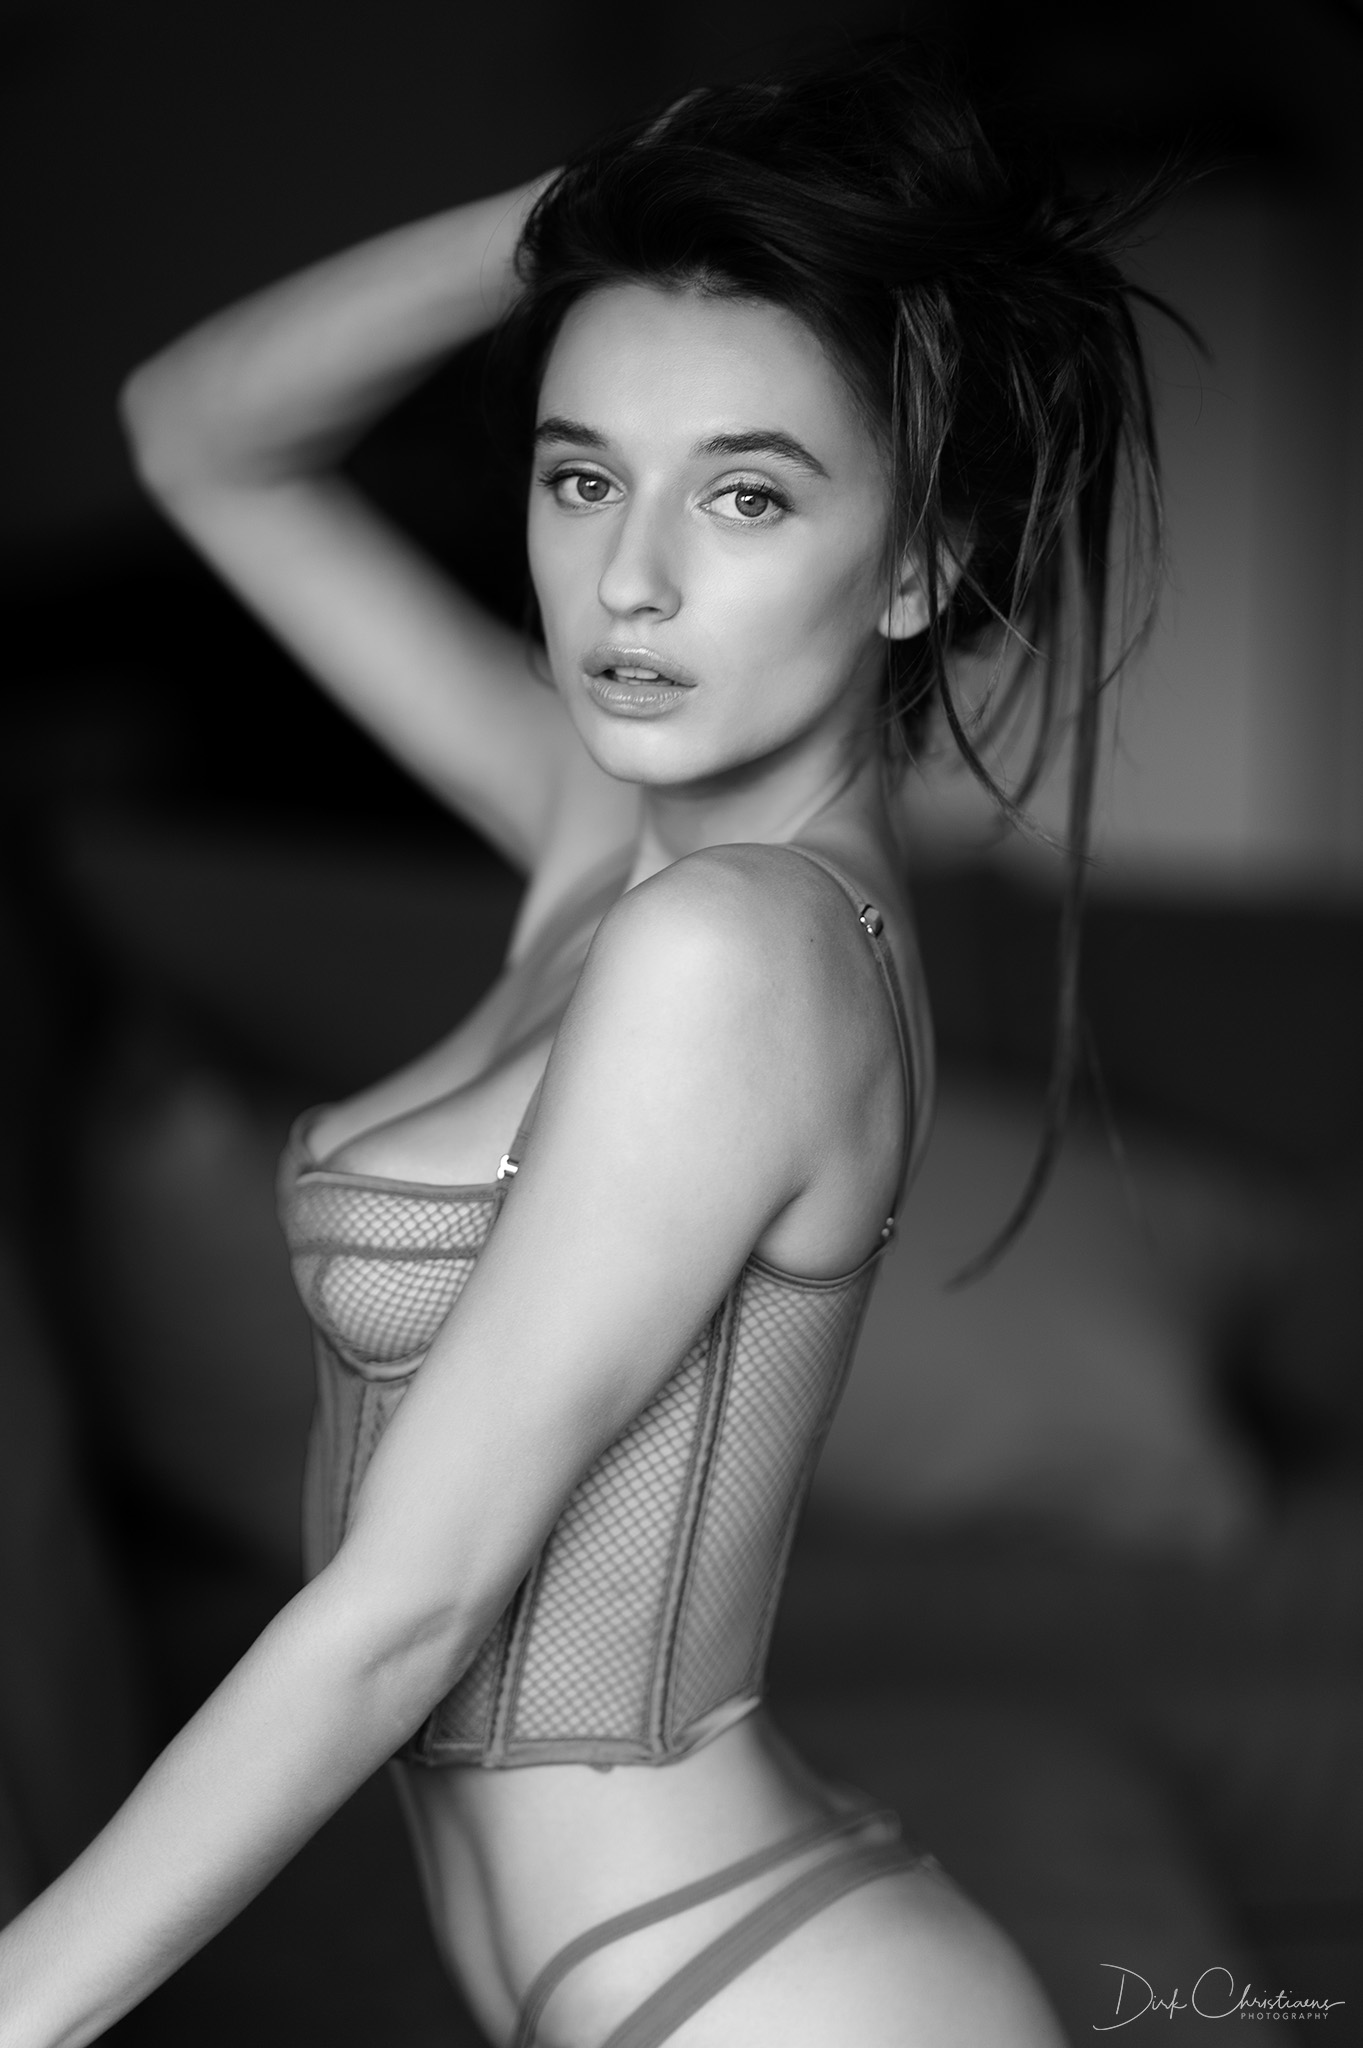 Gloria Sol, model from Ukraine at a boudoir photoshoot